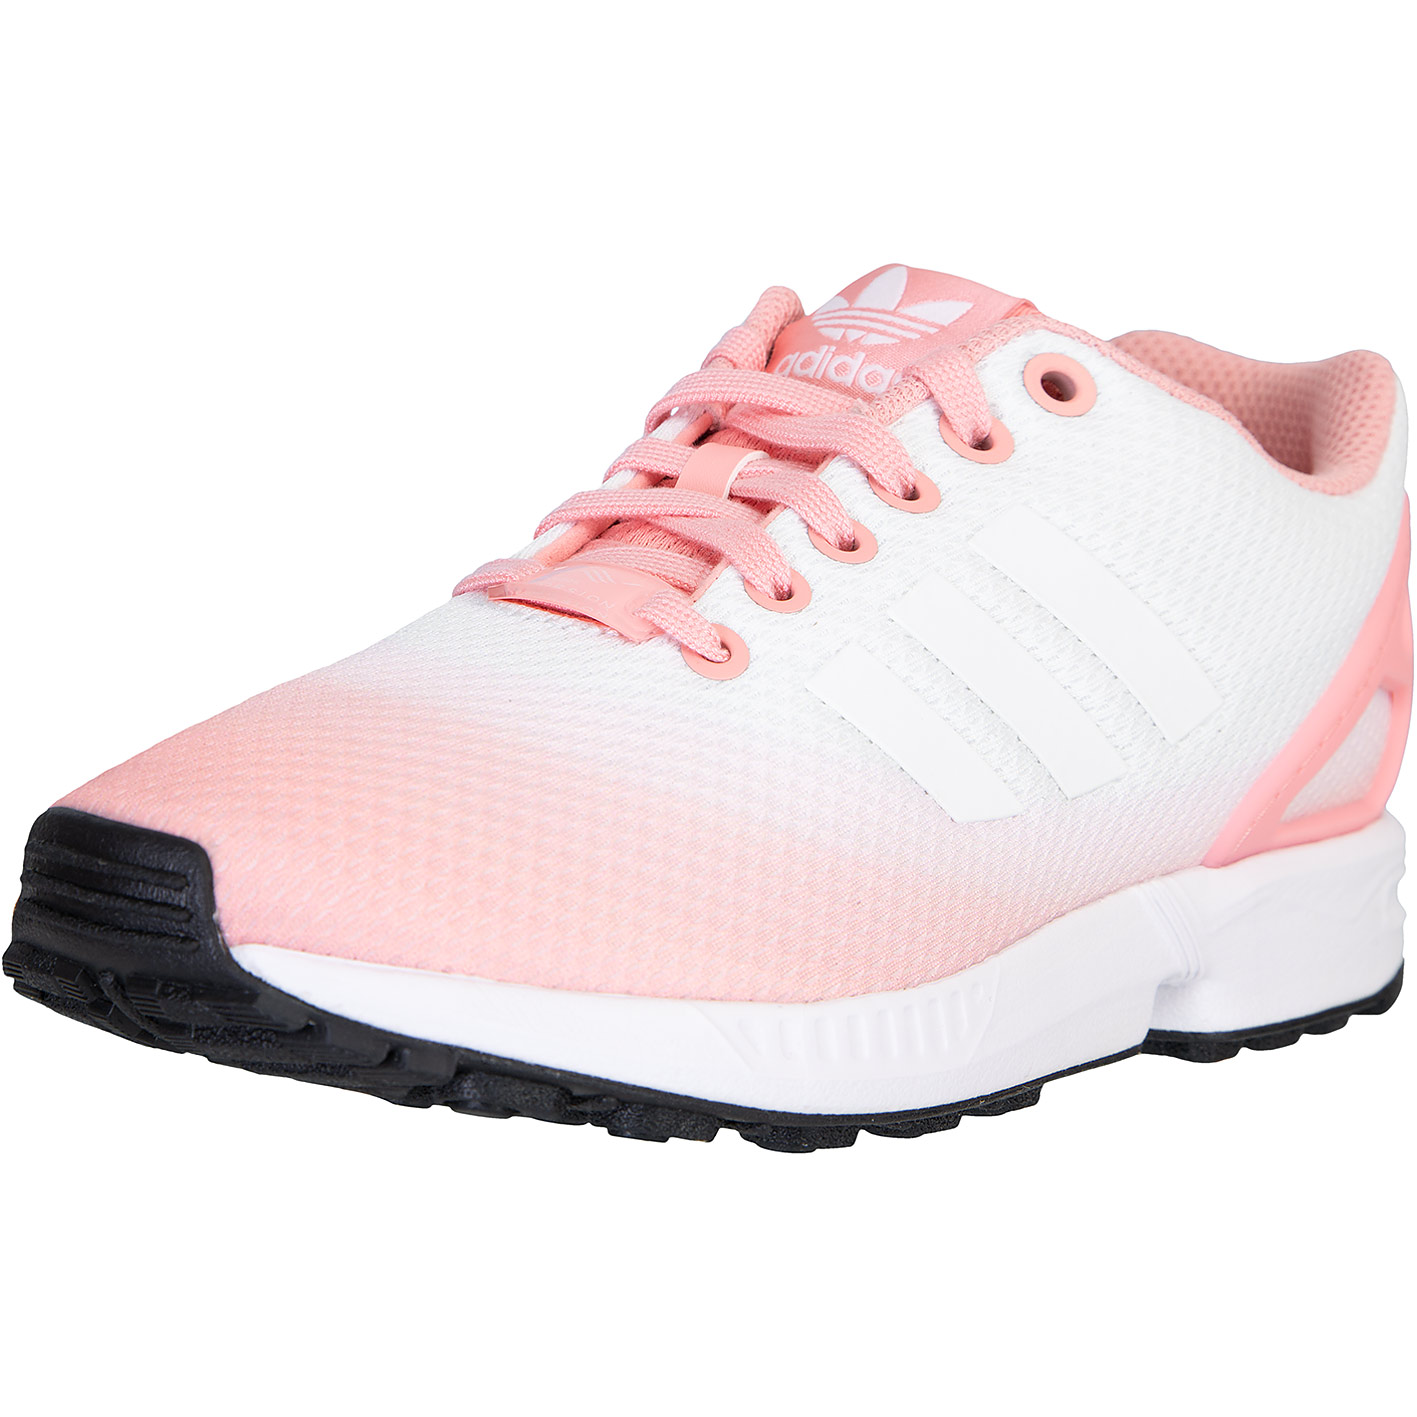 ☆ Adidas ZX Flux Damen Sneaker rosa/weiß - hier bestellen!